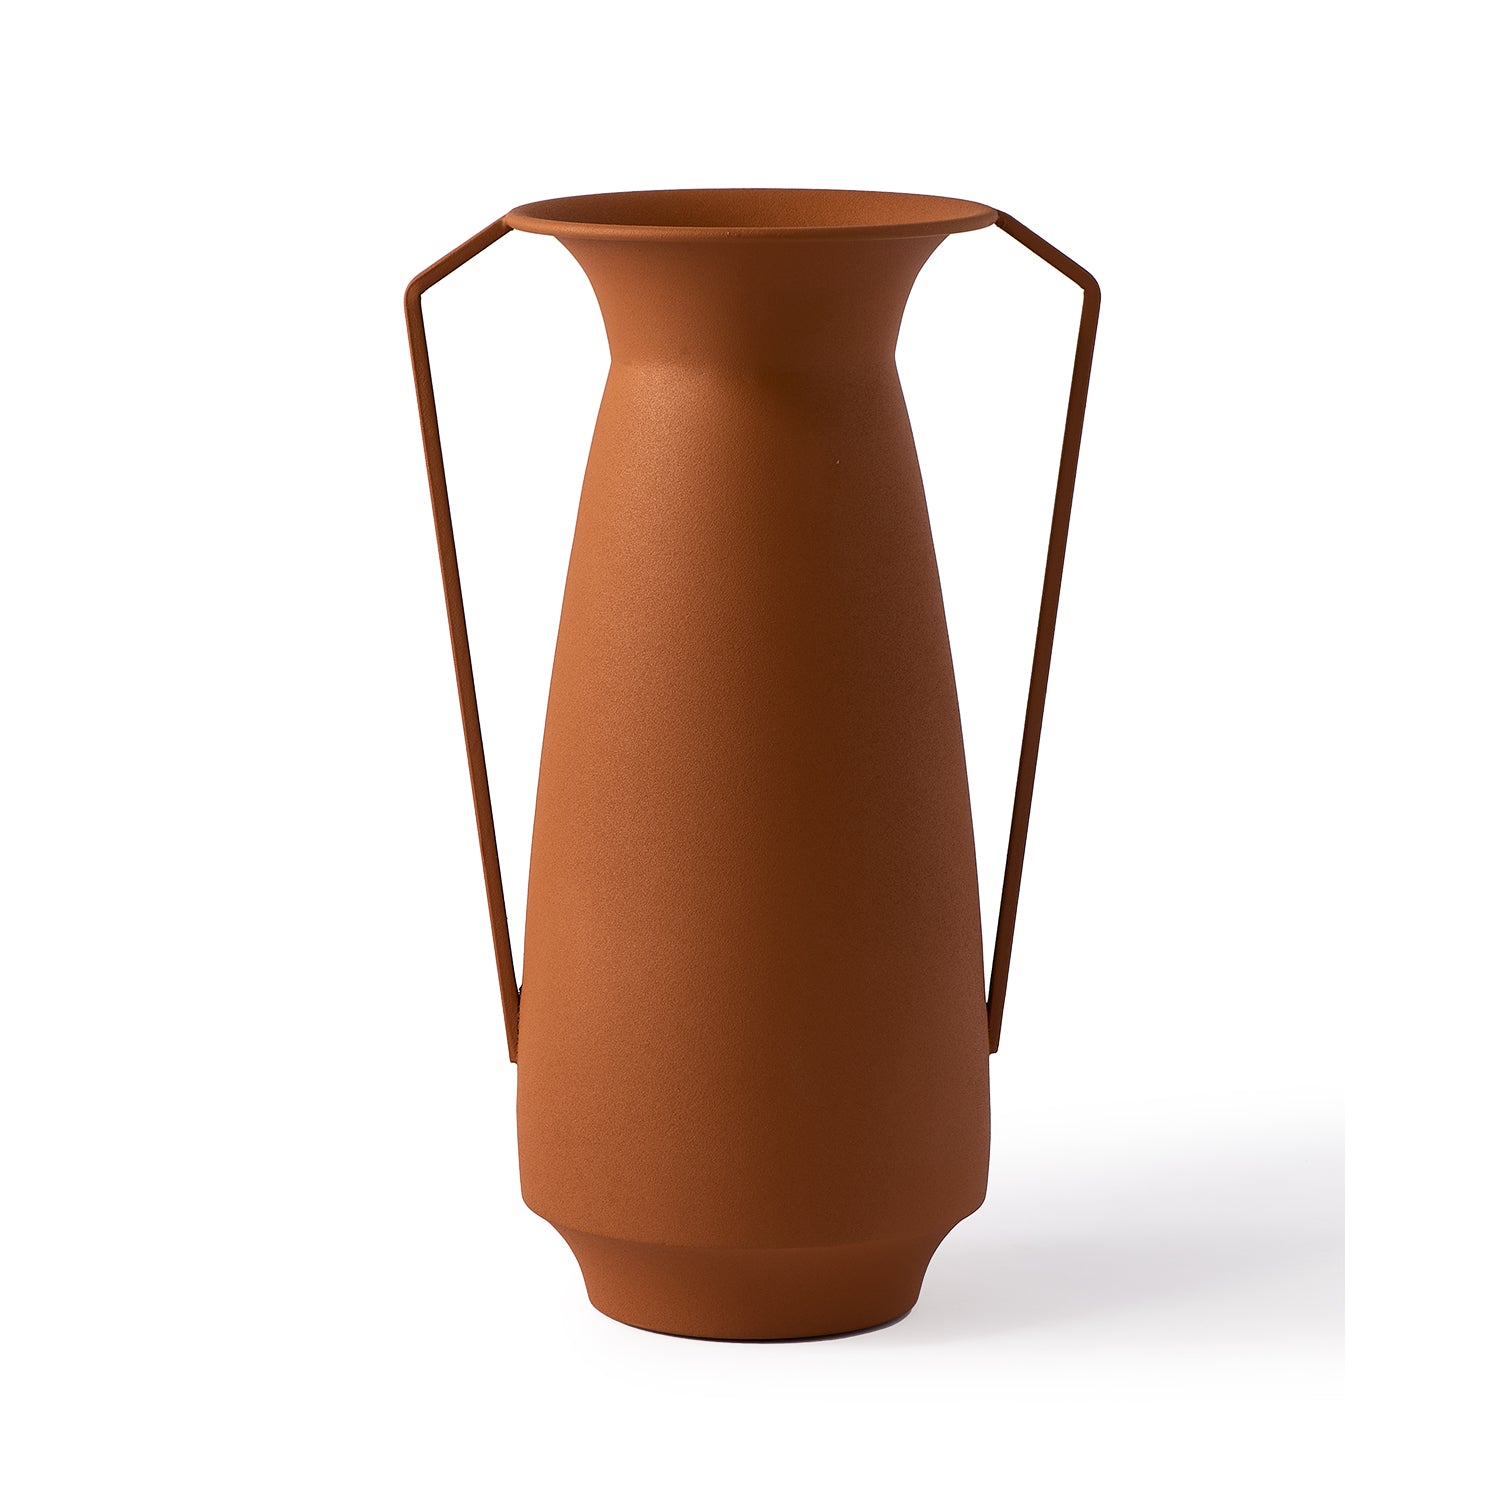 Morning Roman Vases (set of 4) - The Design Choice